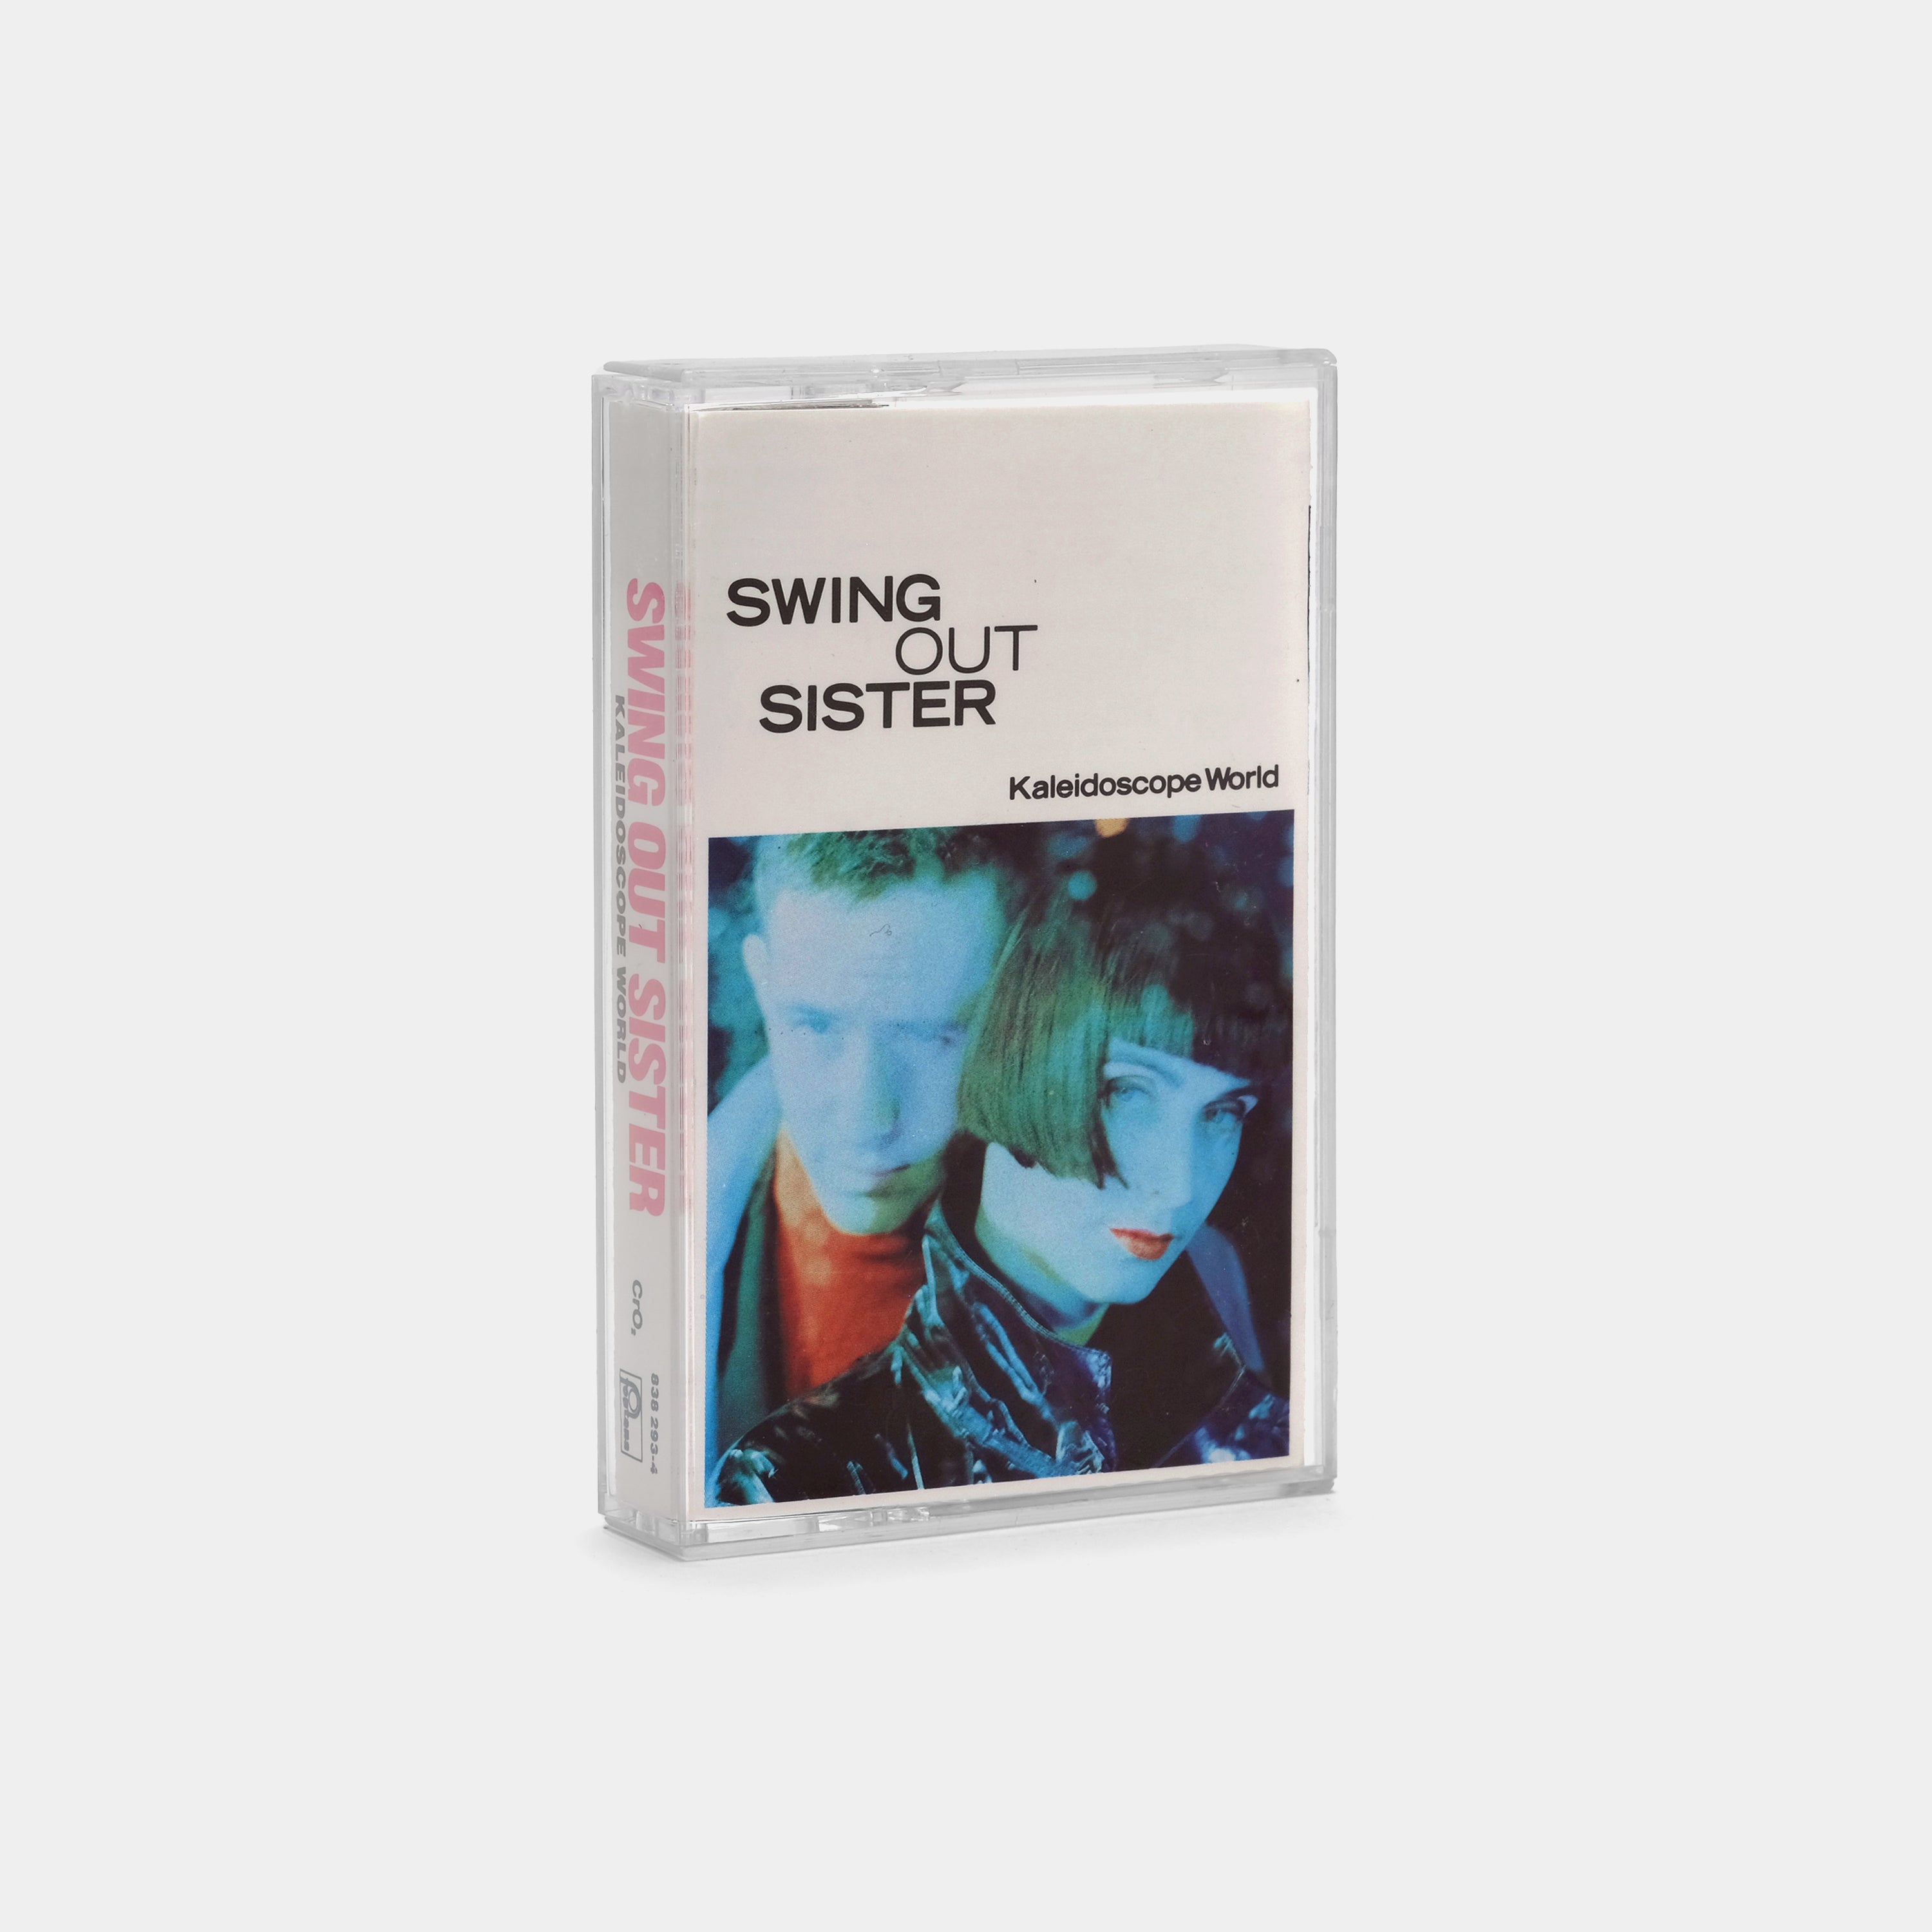 Swing Out Sister - Kaleidoscope World Cassette Tape